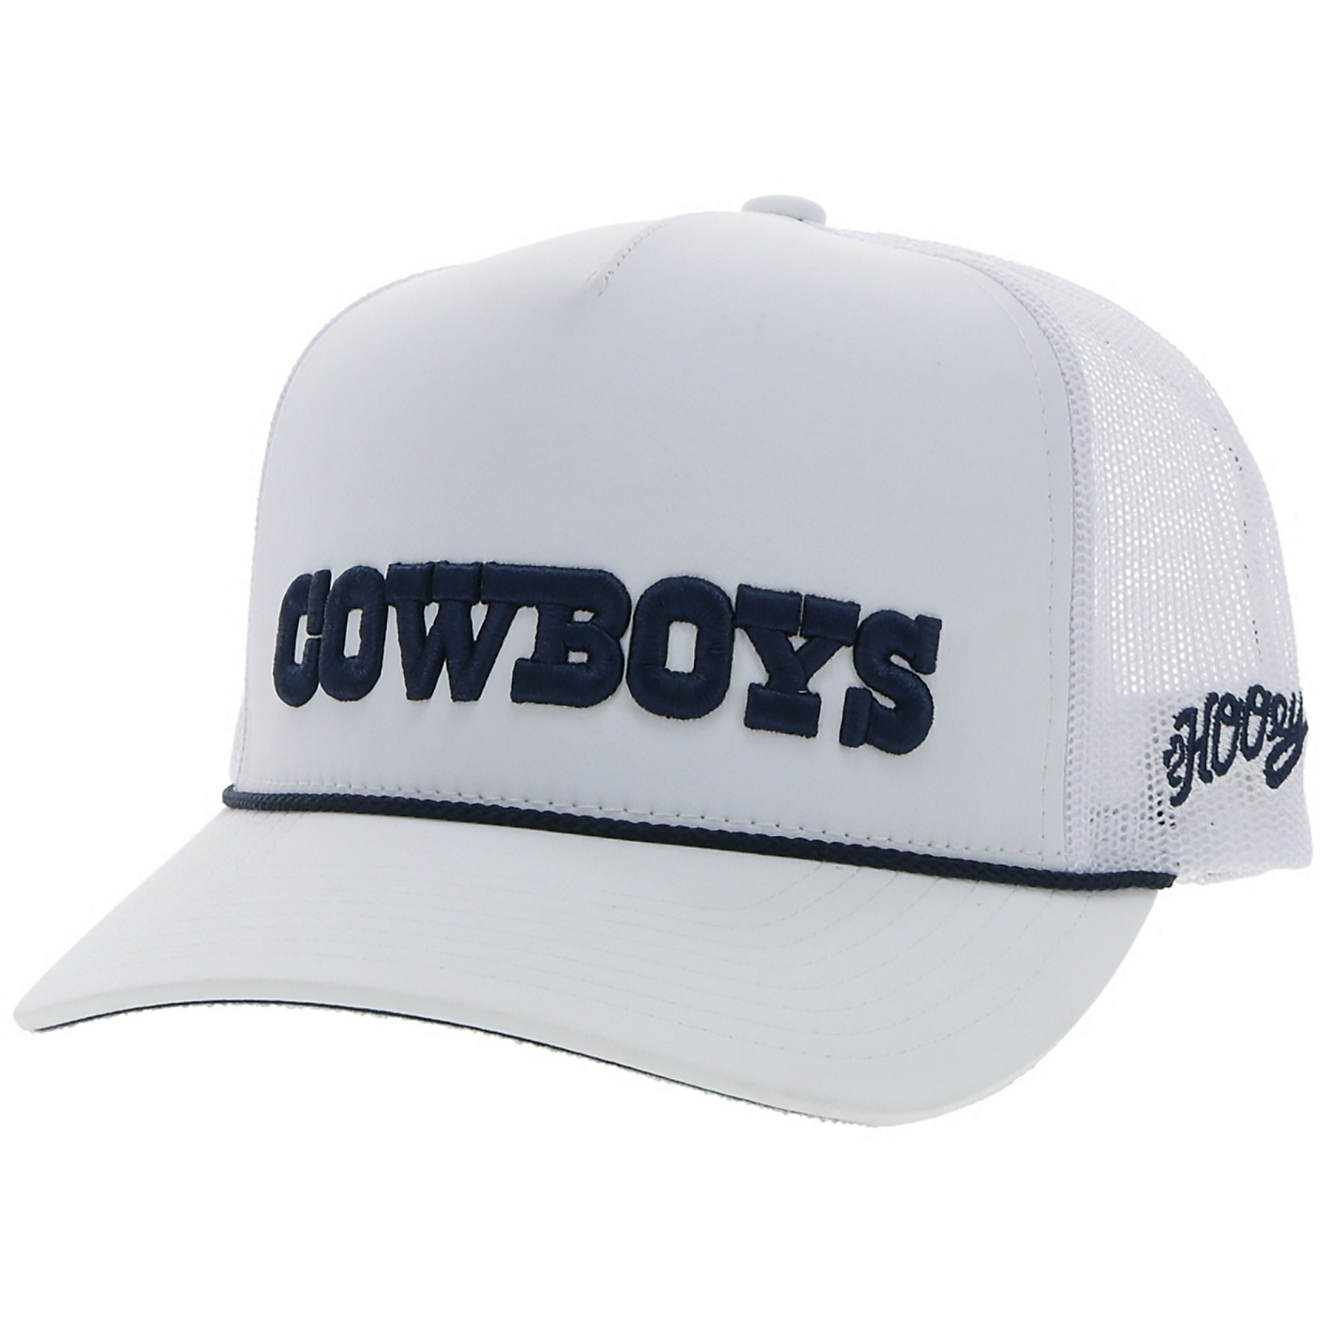 cowboys golf hat